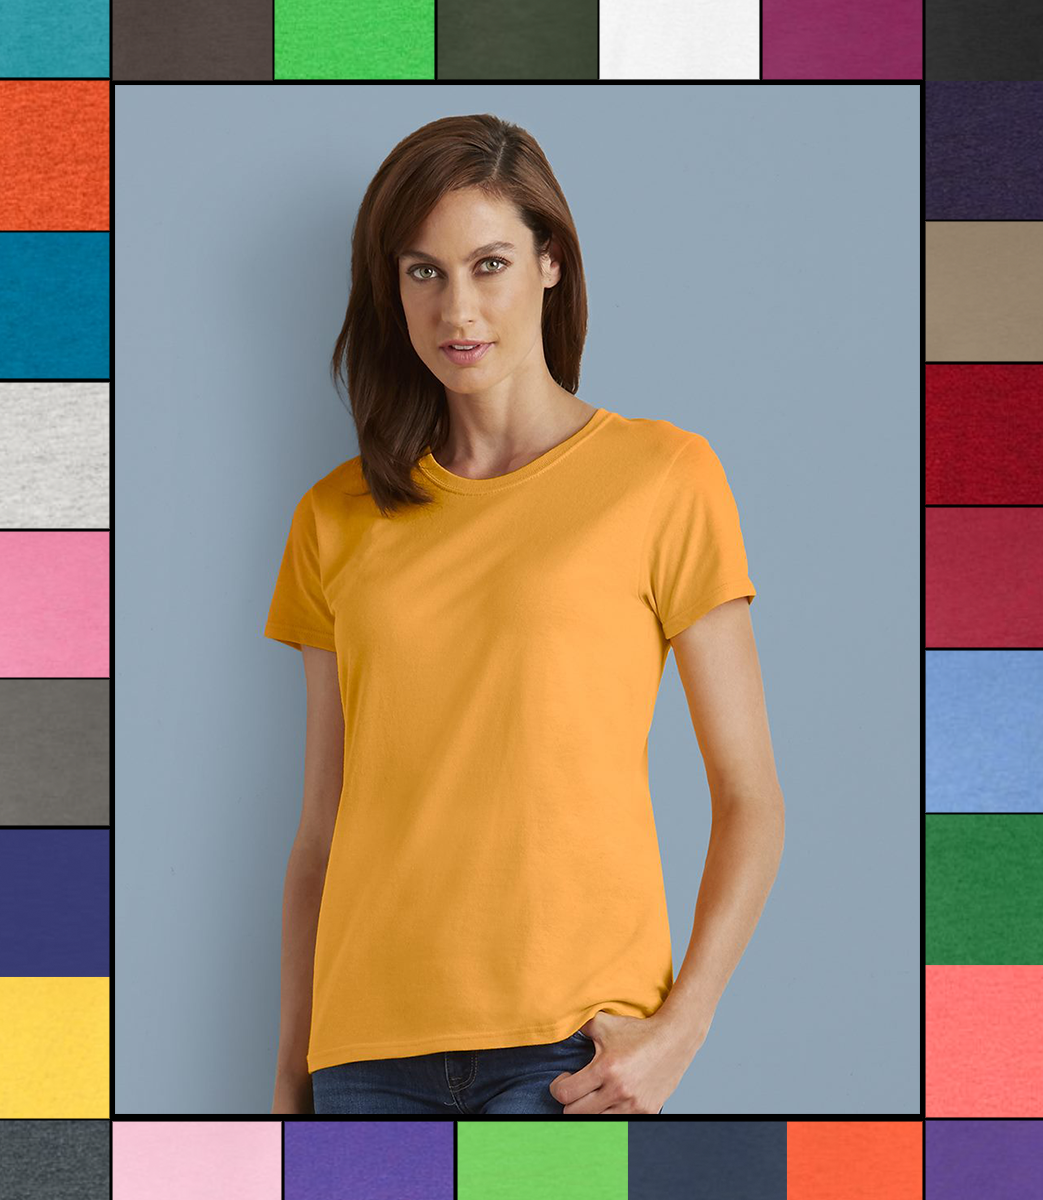 Gildan Womens Plain T Shirt Solid Cotton Short Sleeve Blank Tee Top Shirts G500l